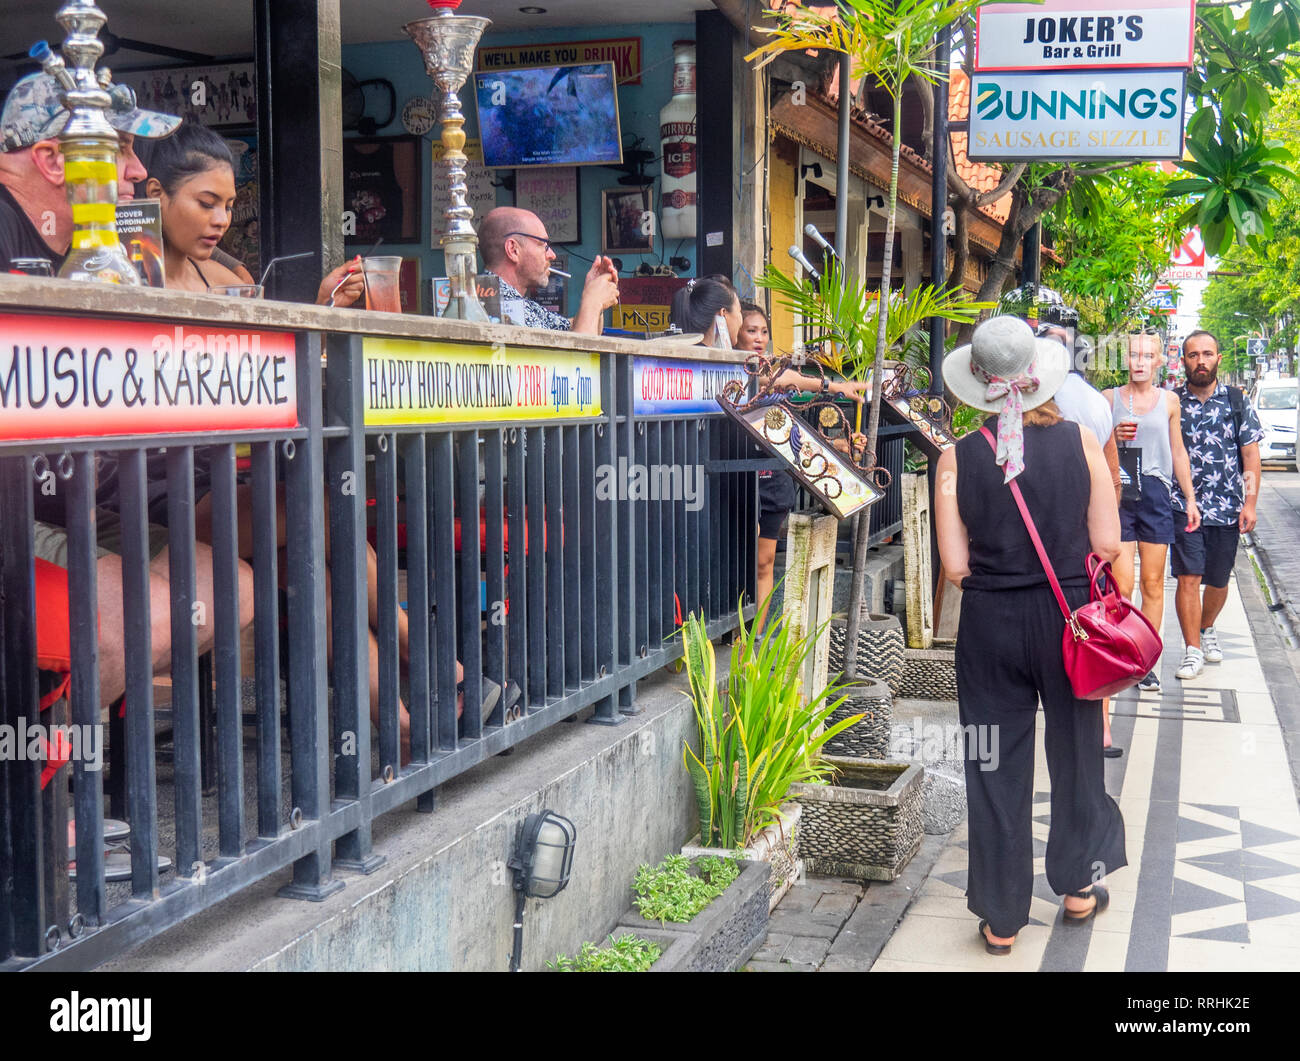 Turisti australiani oltrepassando il Joker's Bar & Grill sul Jl Raya Legian Kuta Bali Indonesia. Foto Stock